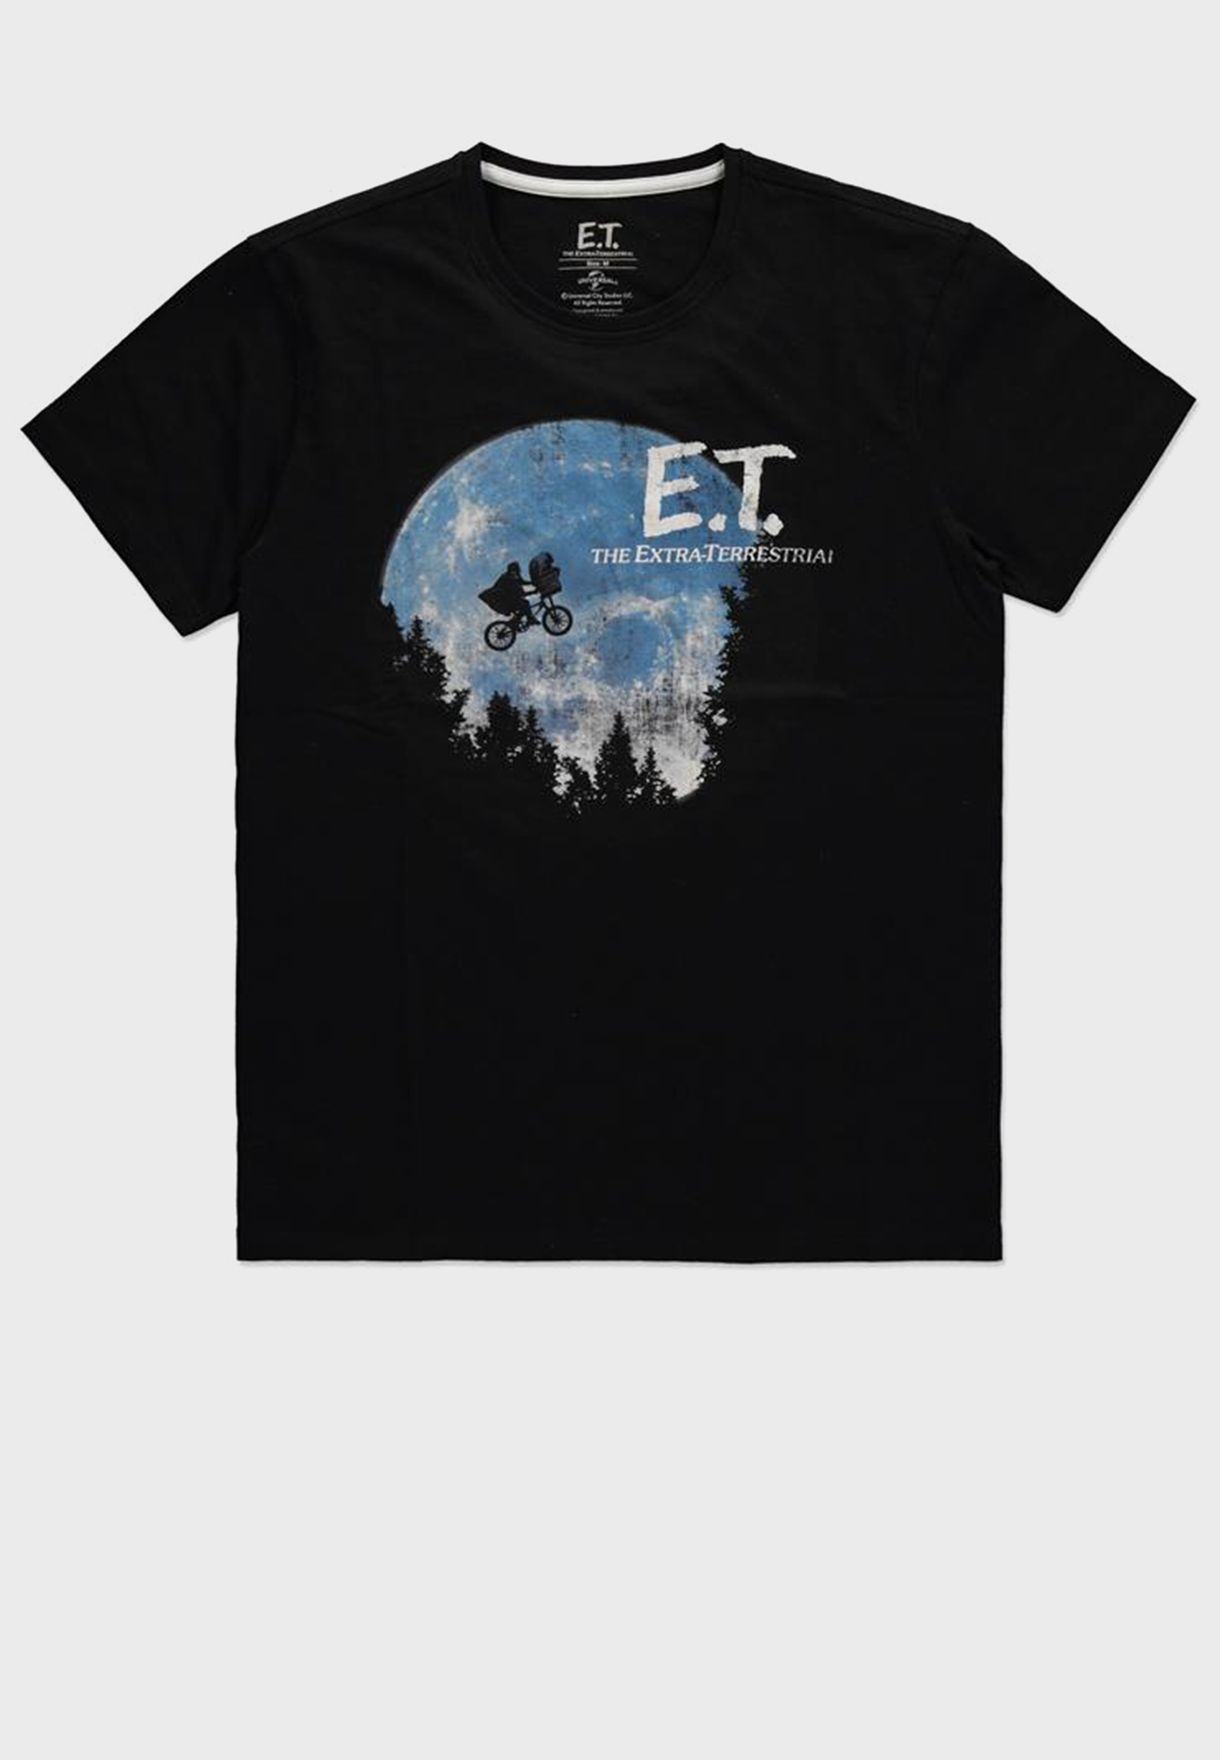 Universal E.T. The Moon